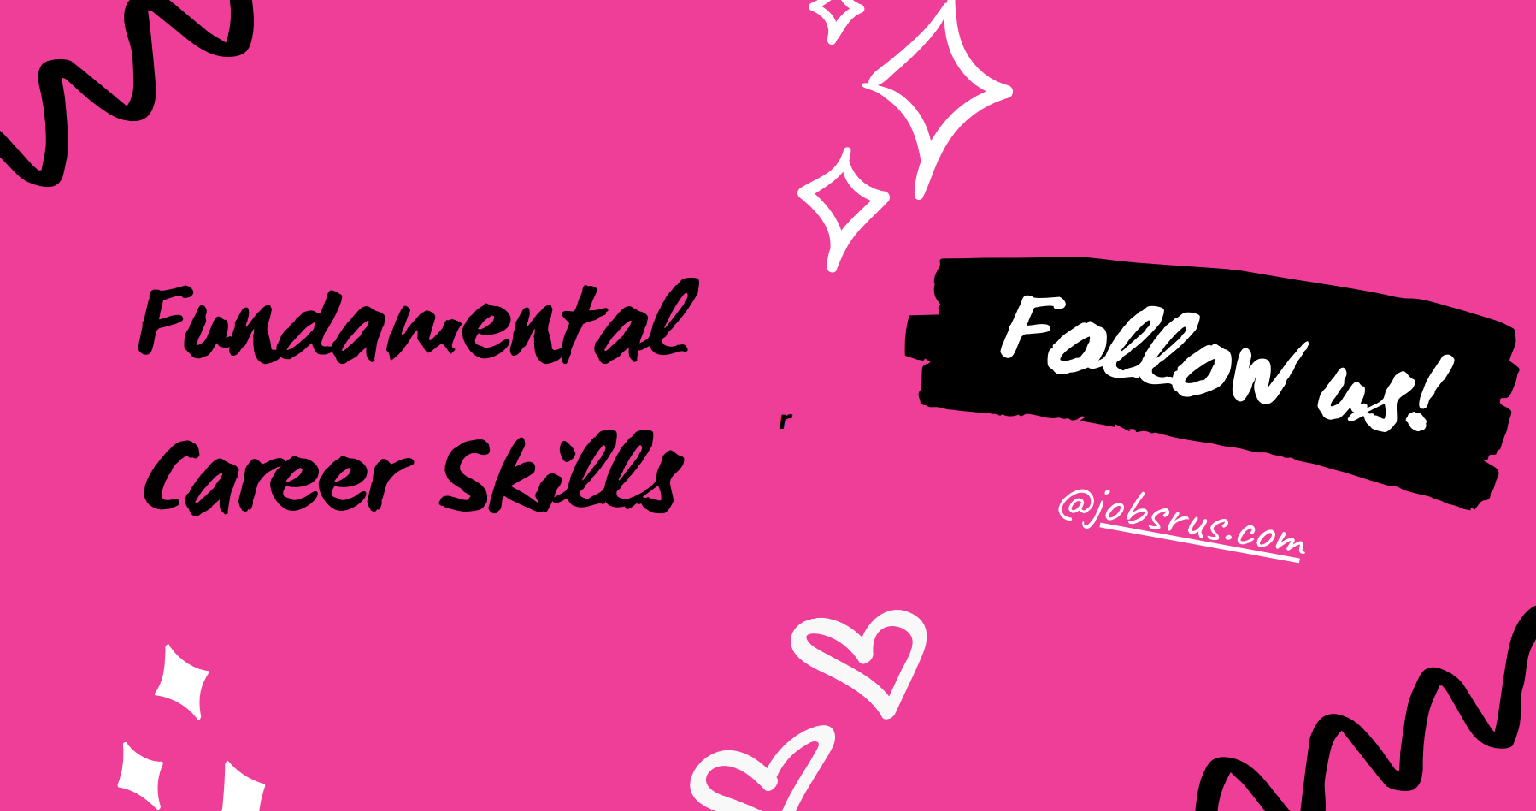 Fundamental Career Skills
